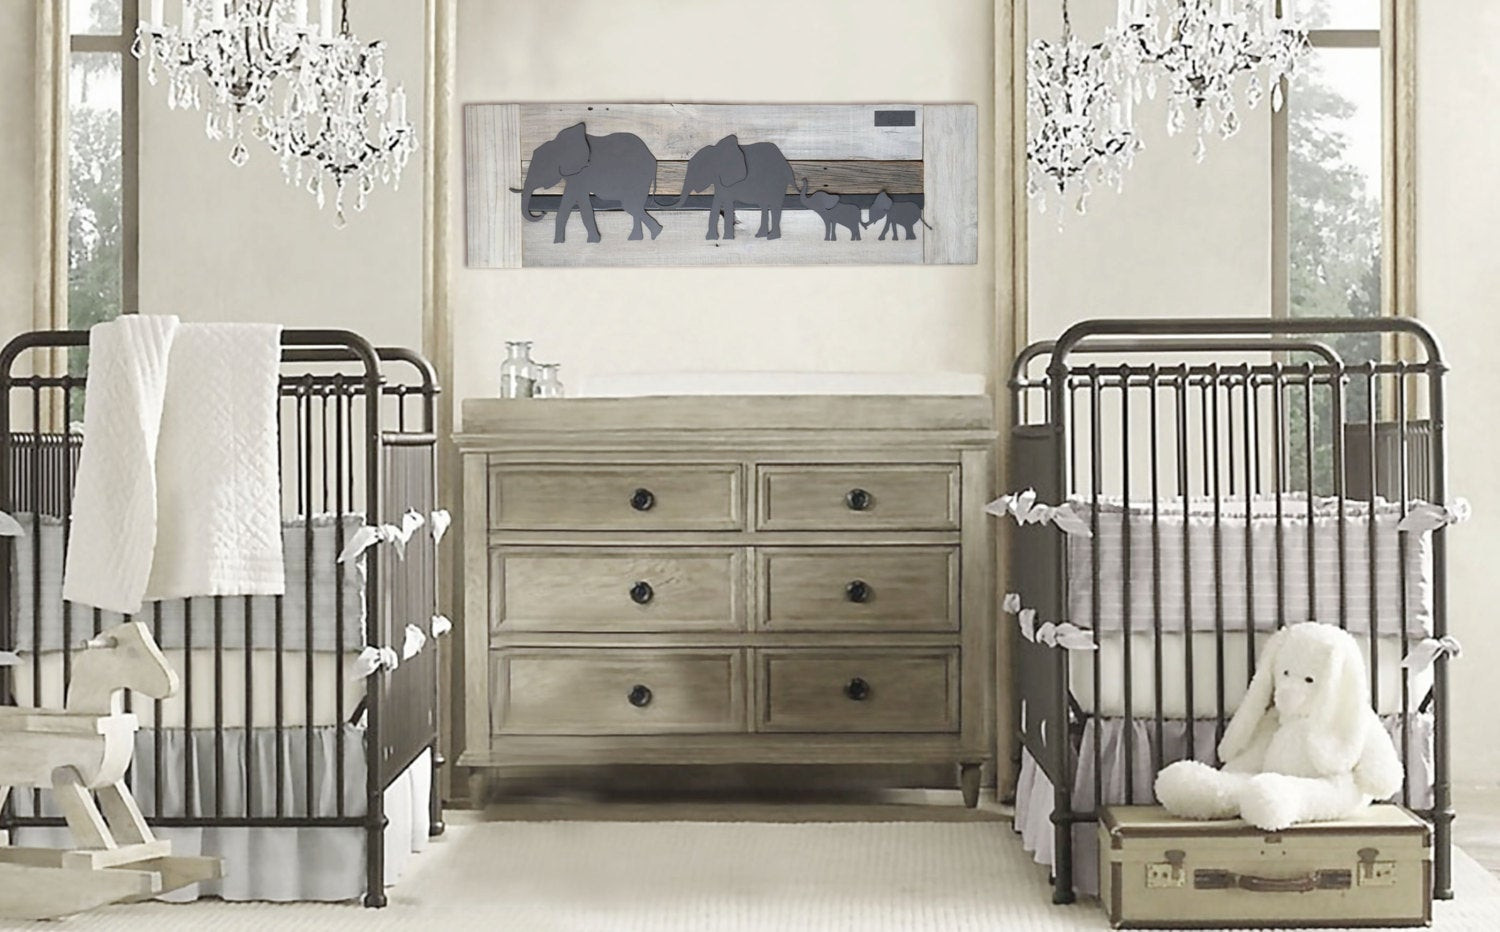 Elephant Decor For Baby Nursery
 Elephant twin nursery wall art Nursery room decor for twins